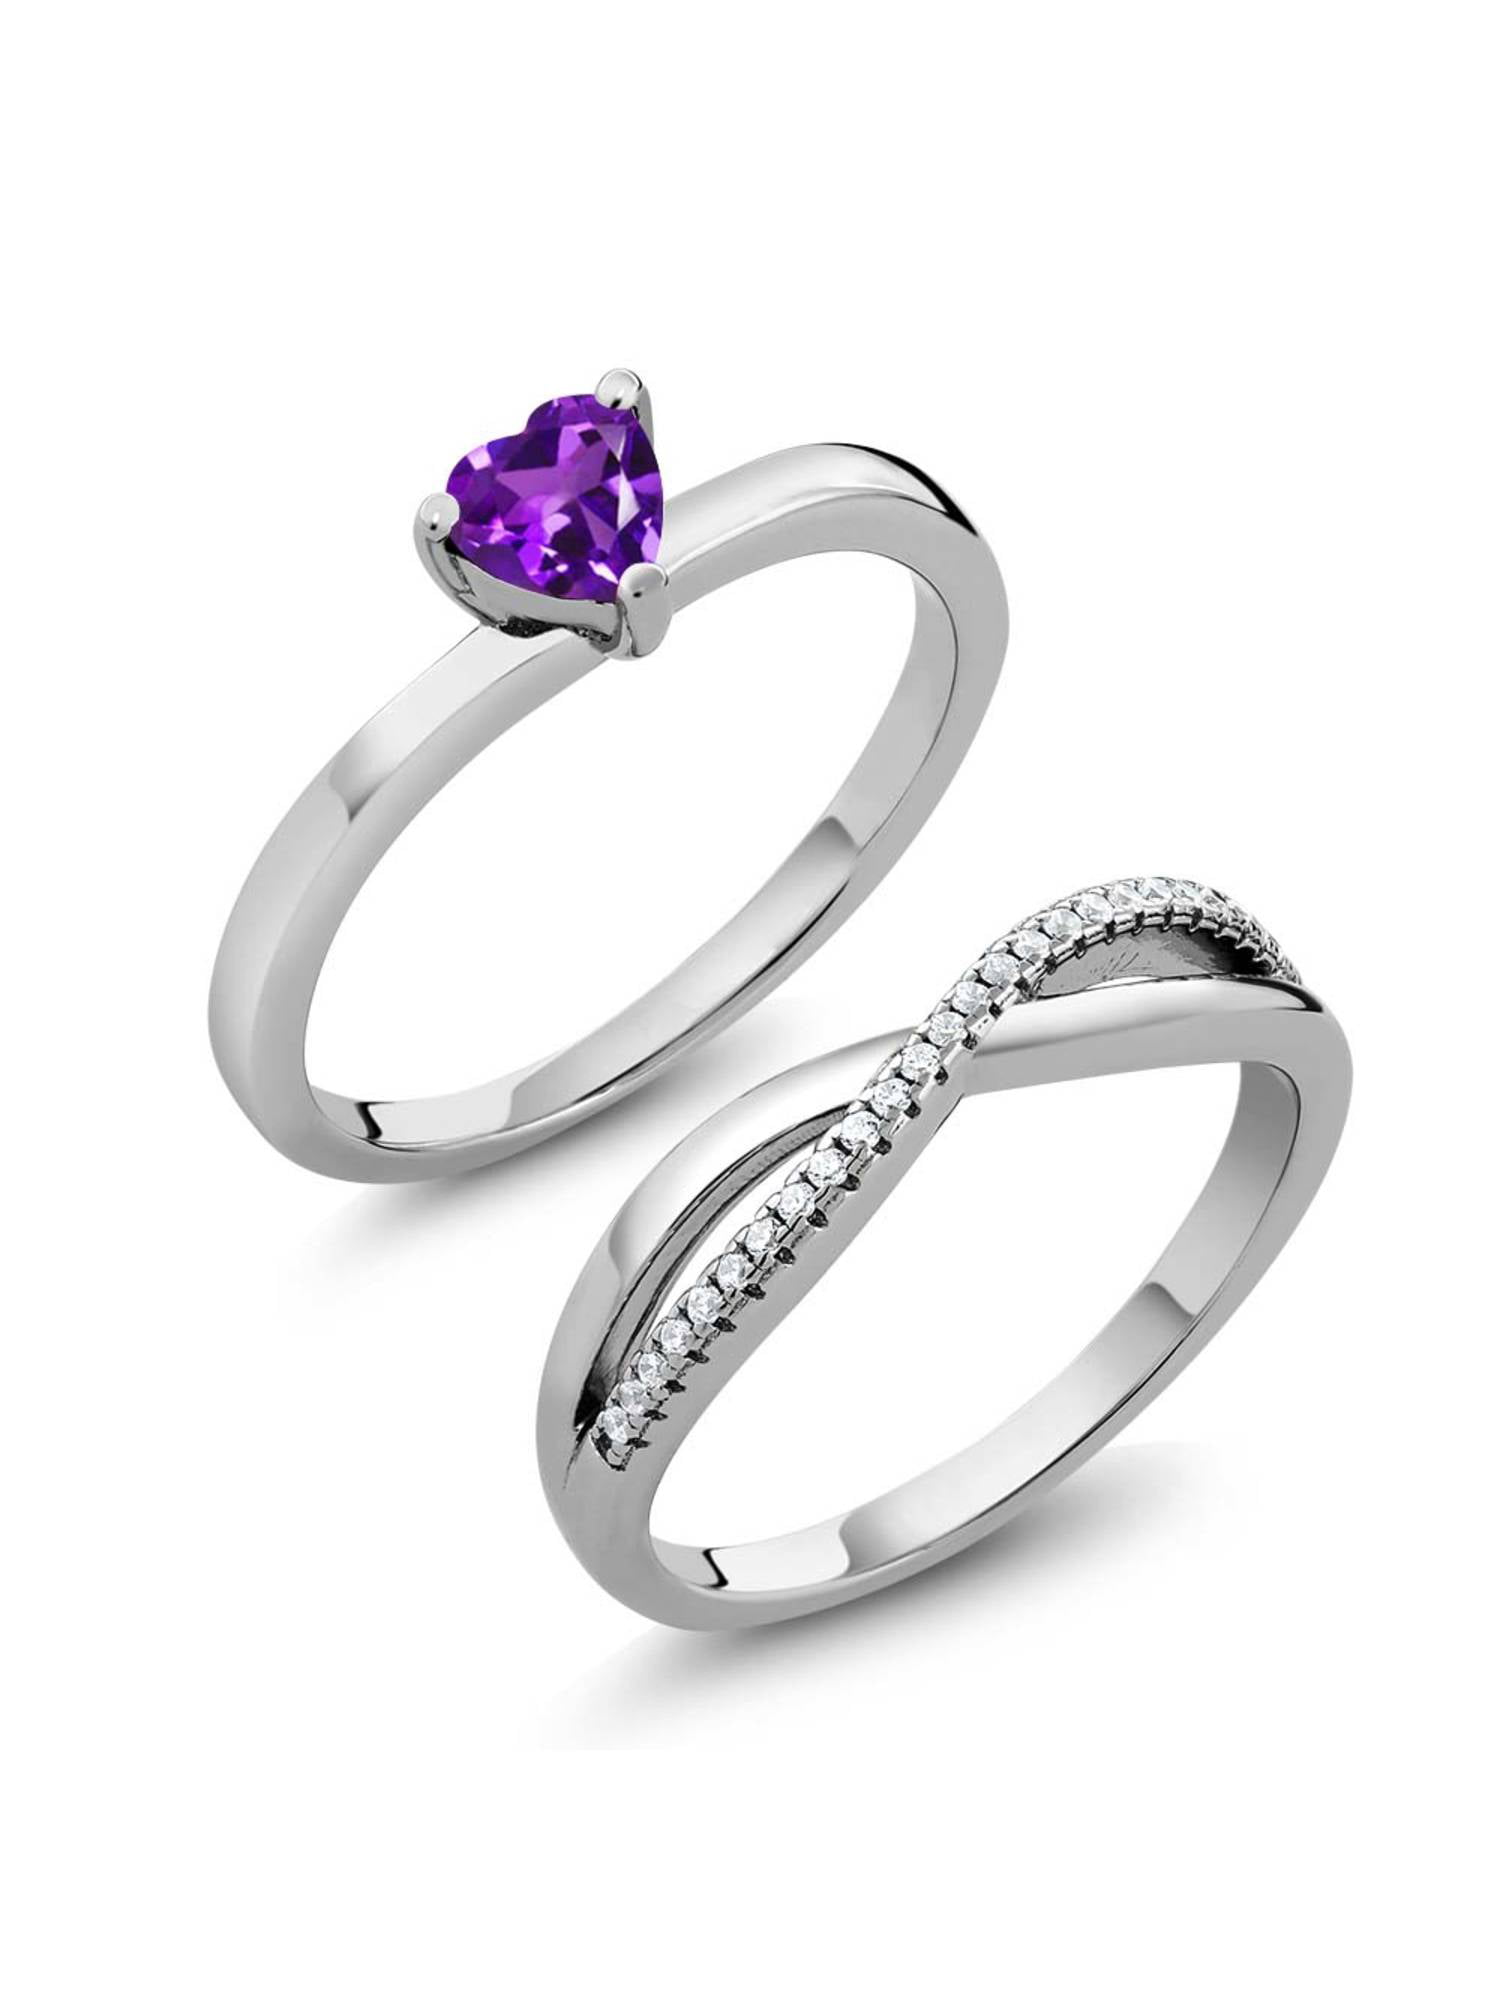 2.35 Ct Pear Cut Amethyst Diamond Wedding Ring Set 925 Sterling Silver Size O P 